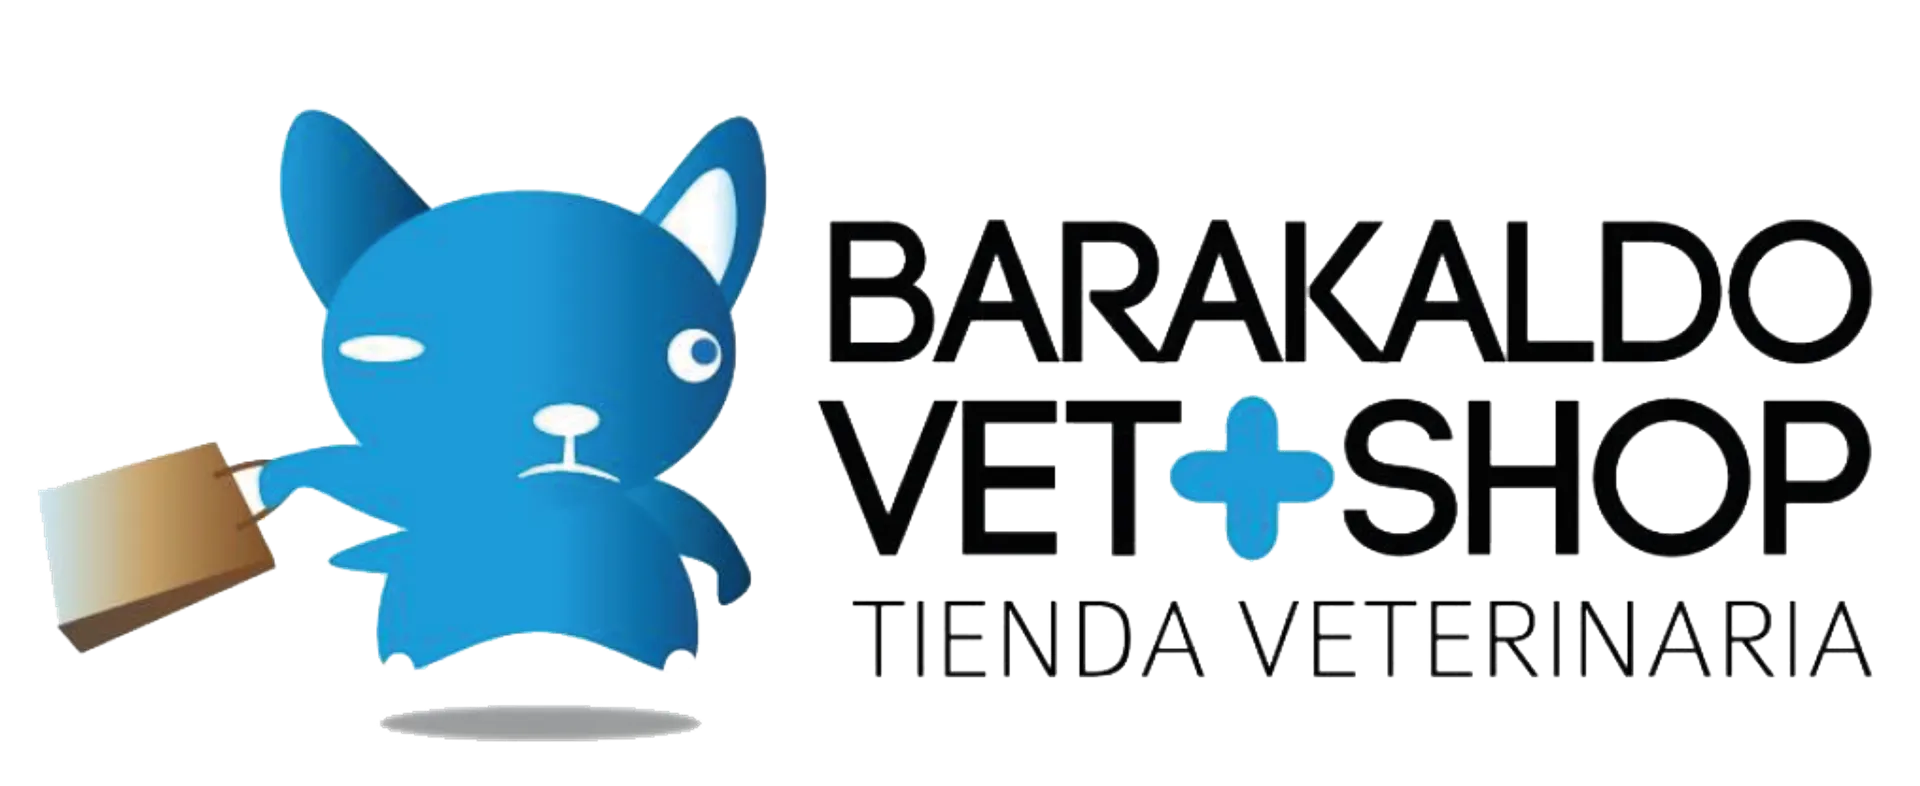 BARAKALDO logo